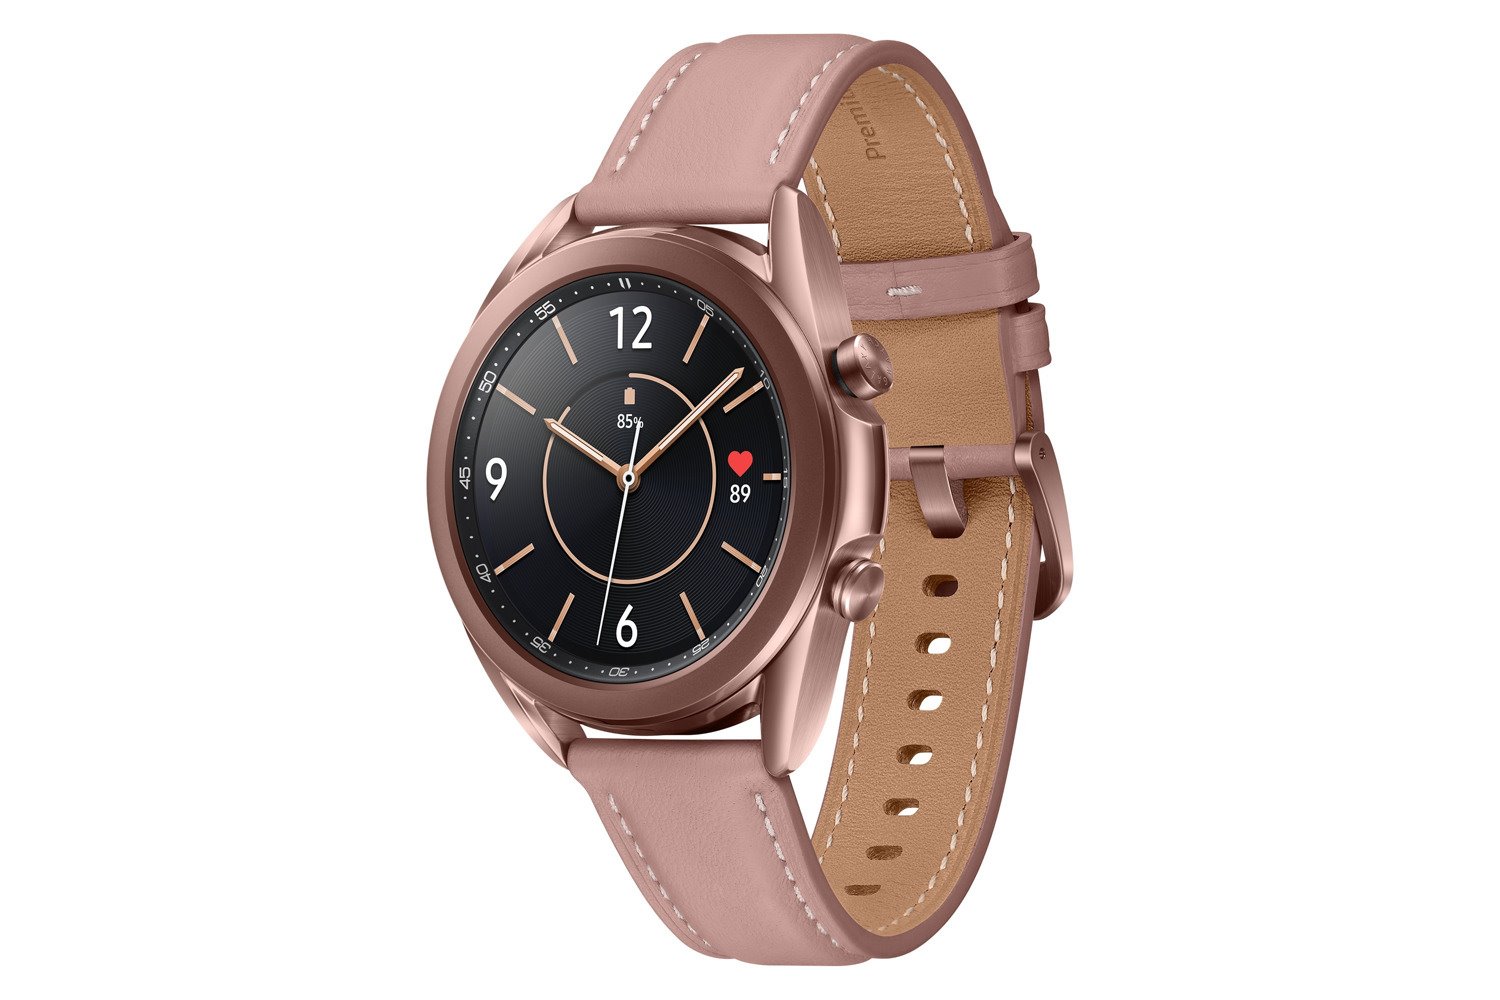 Buy Samsung Galaxy Watch3 Smart Watch - Wrist Wearable - Mystic Bronze